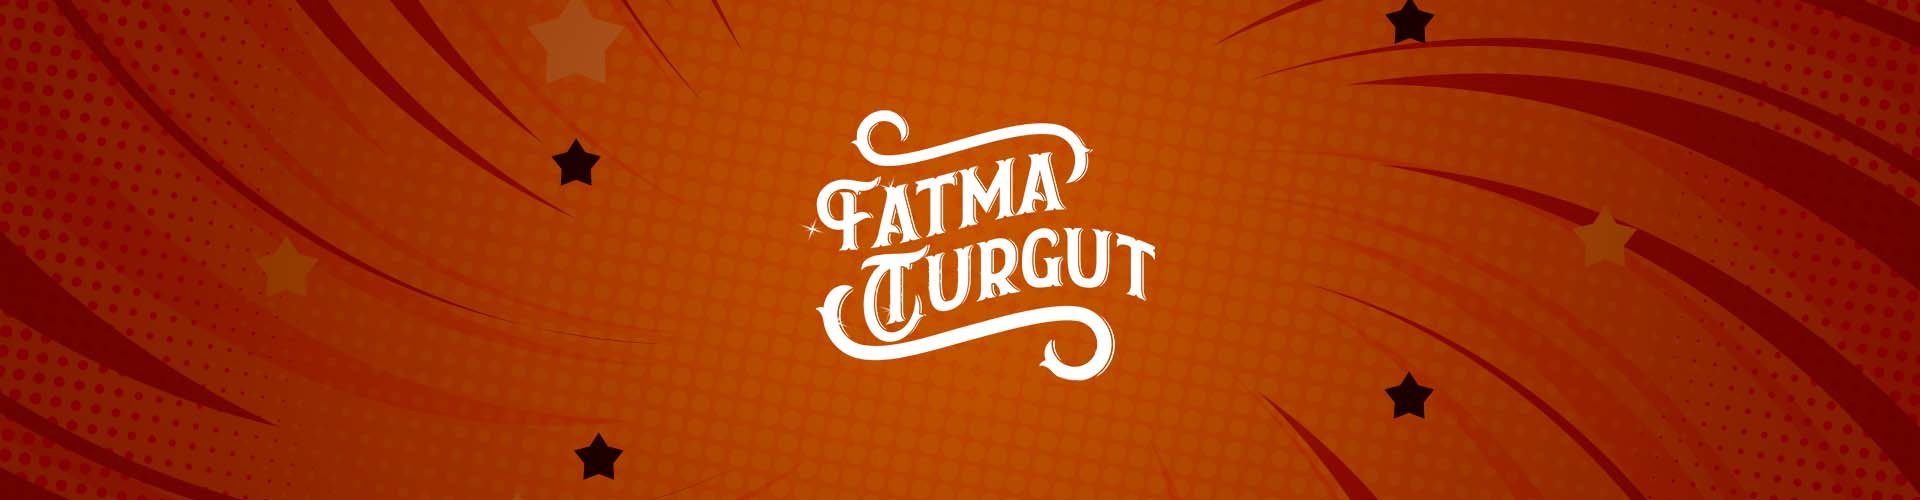 FatmaTurgut バナー